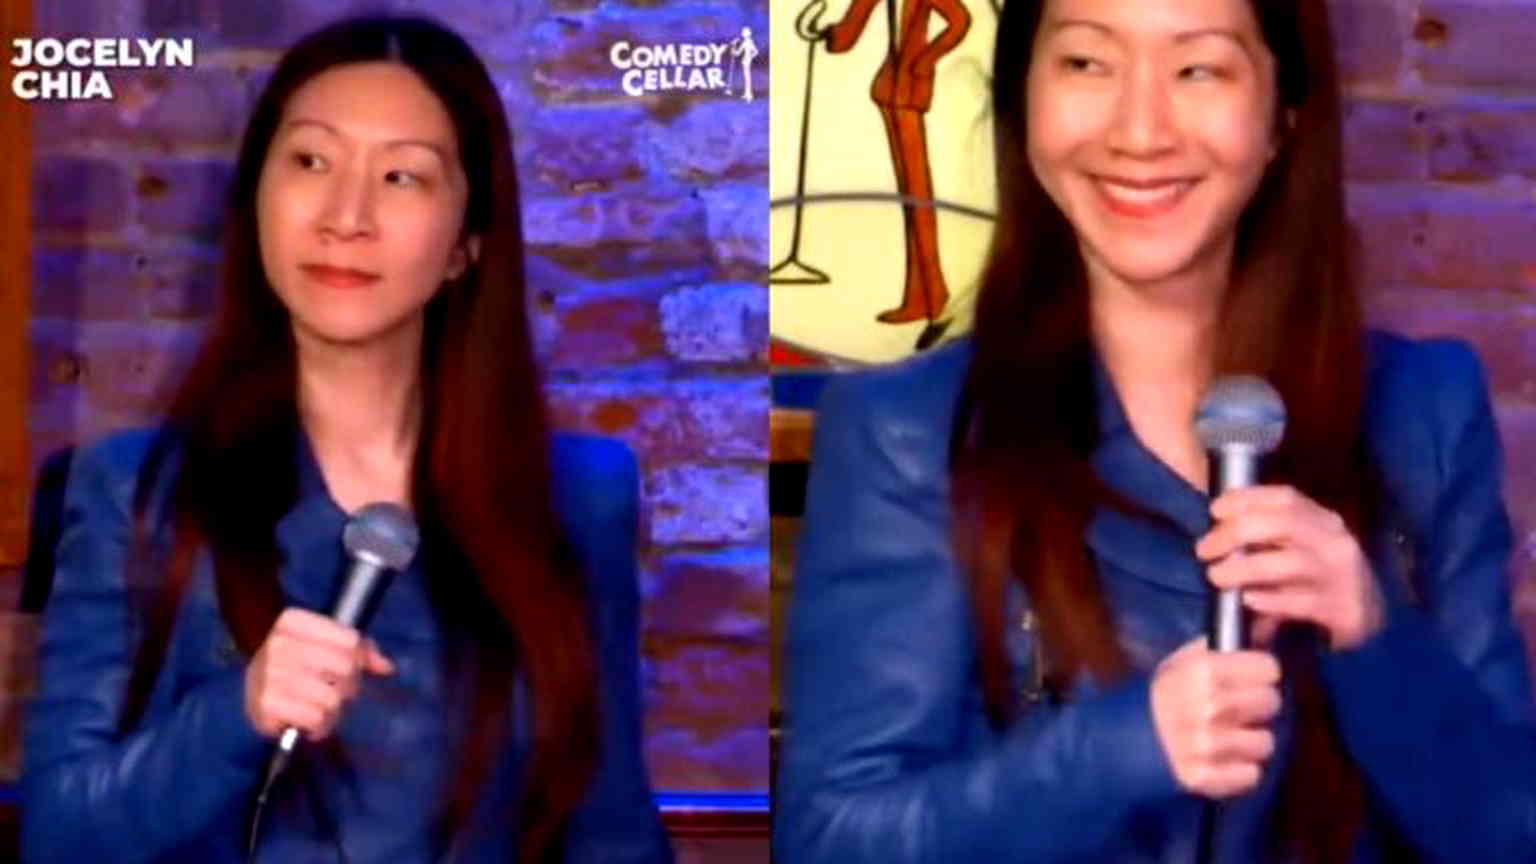 Comedian Jocelyn Chia sparks backlash in Malaysia, Singapore for MH370 joke